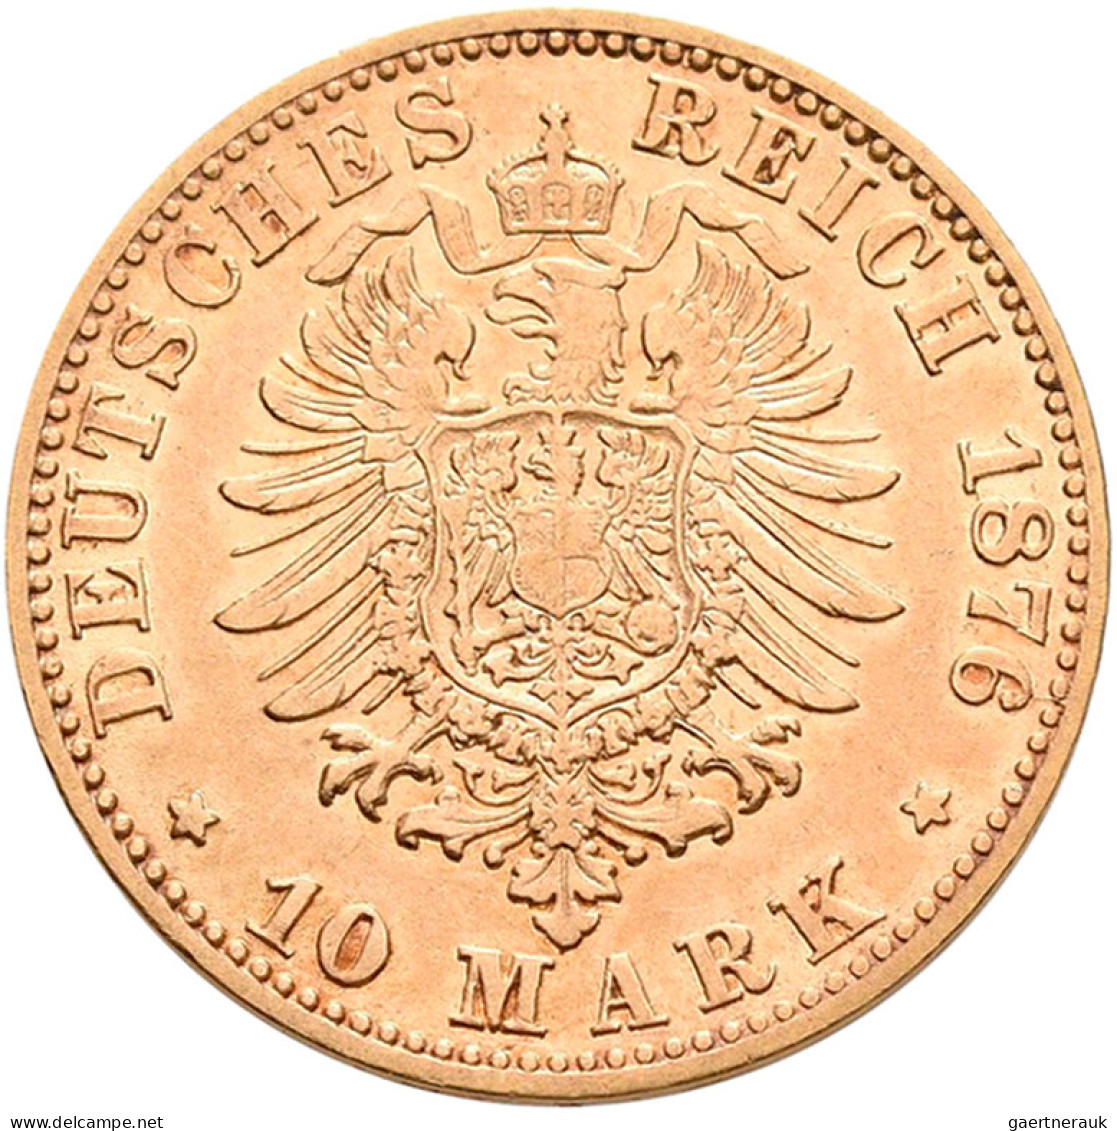 Baden - Anlagegold: Friedrich I. 1852-1907: 10 Mark 1876 G, Jäger 186, Gold 900/ - 5, 10 & 20 Mark Or